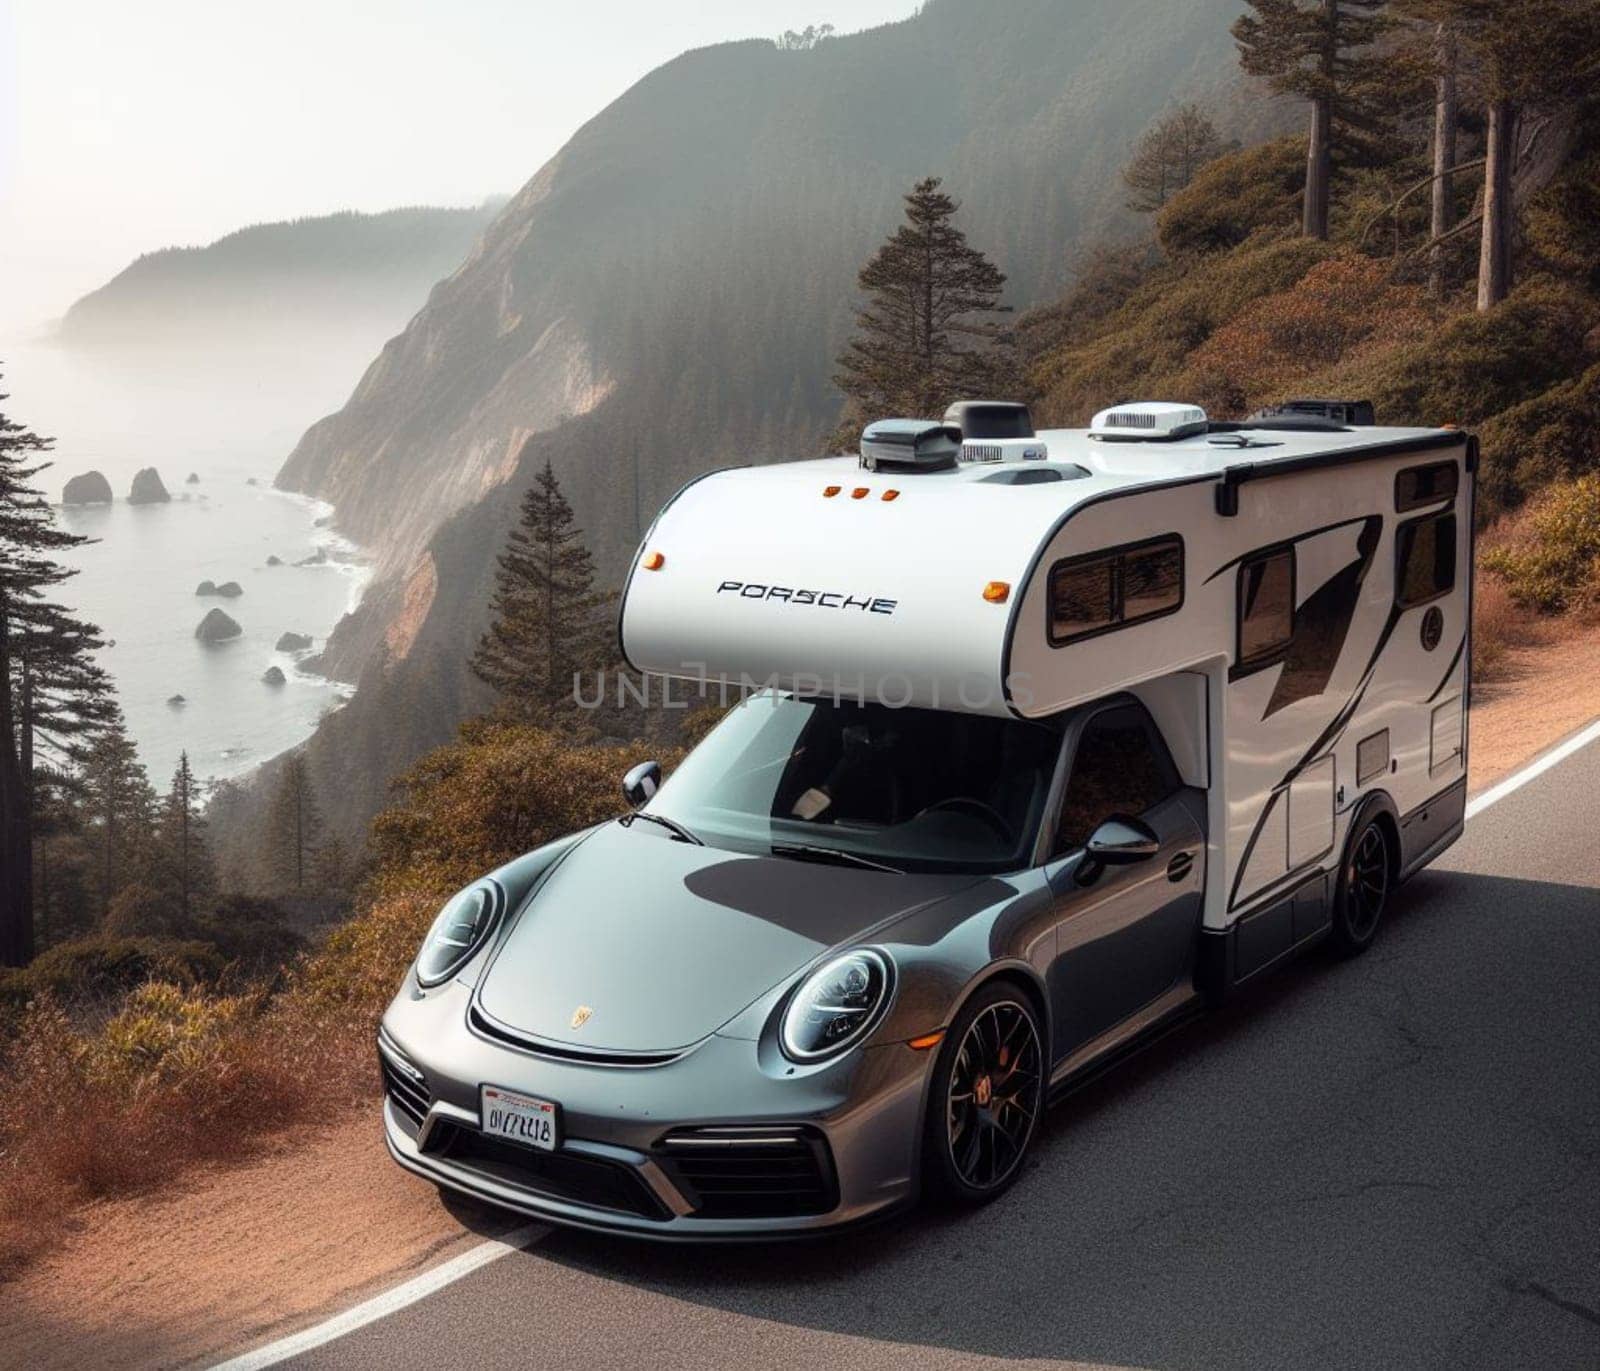 classic german 911 sport supercar design camper van conversion for digital nomad adventure weekender by verbano